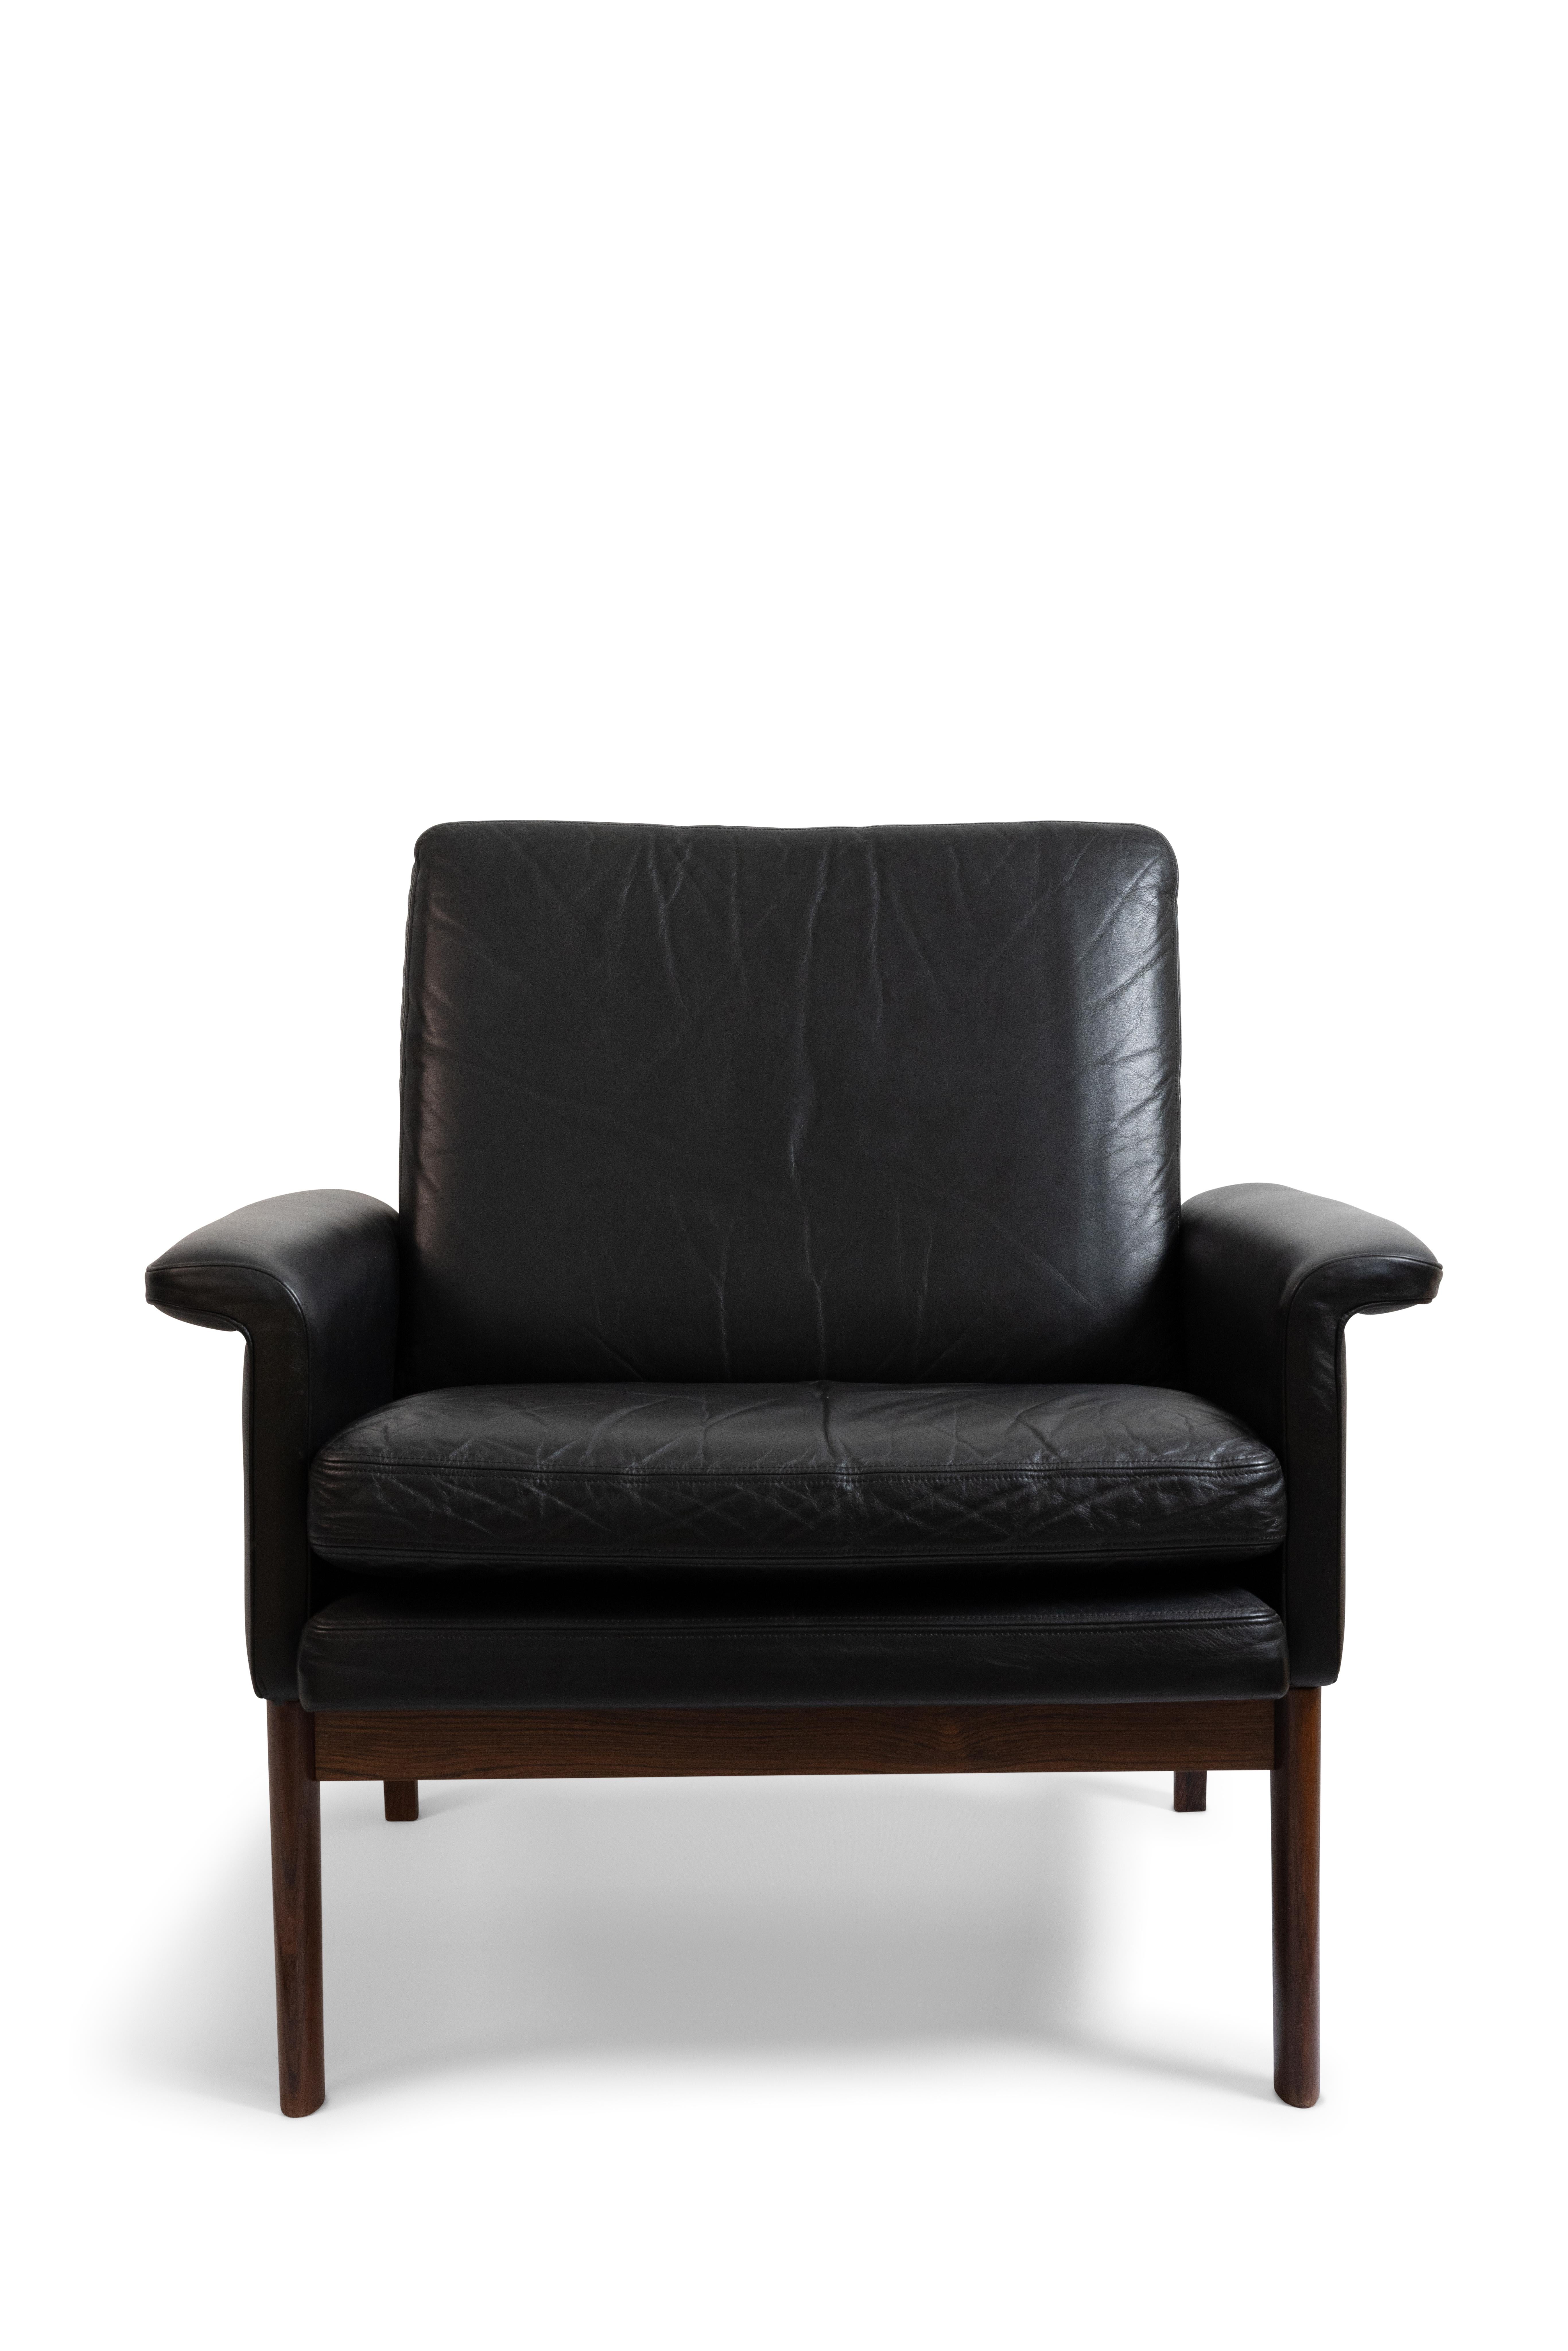 Finn Juhl Dreisitzer-Sofa mit schwarzem Original-Leder, Modell 218/3, Dänemark (Dänisch) im Angebot